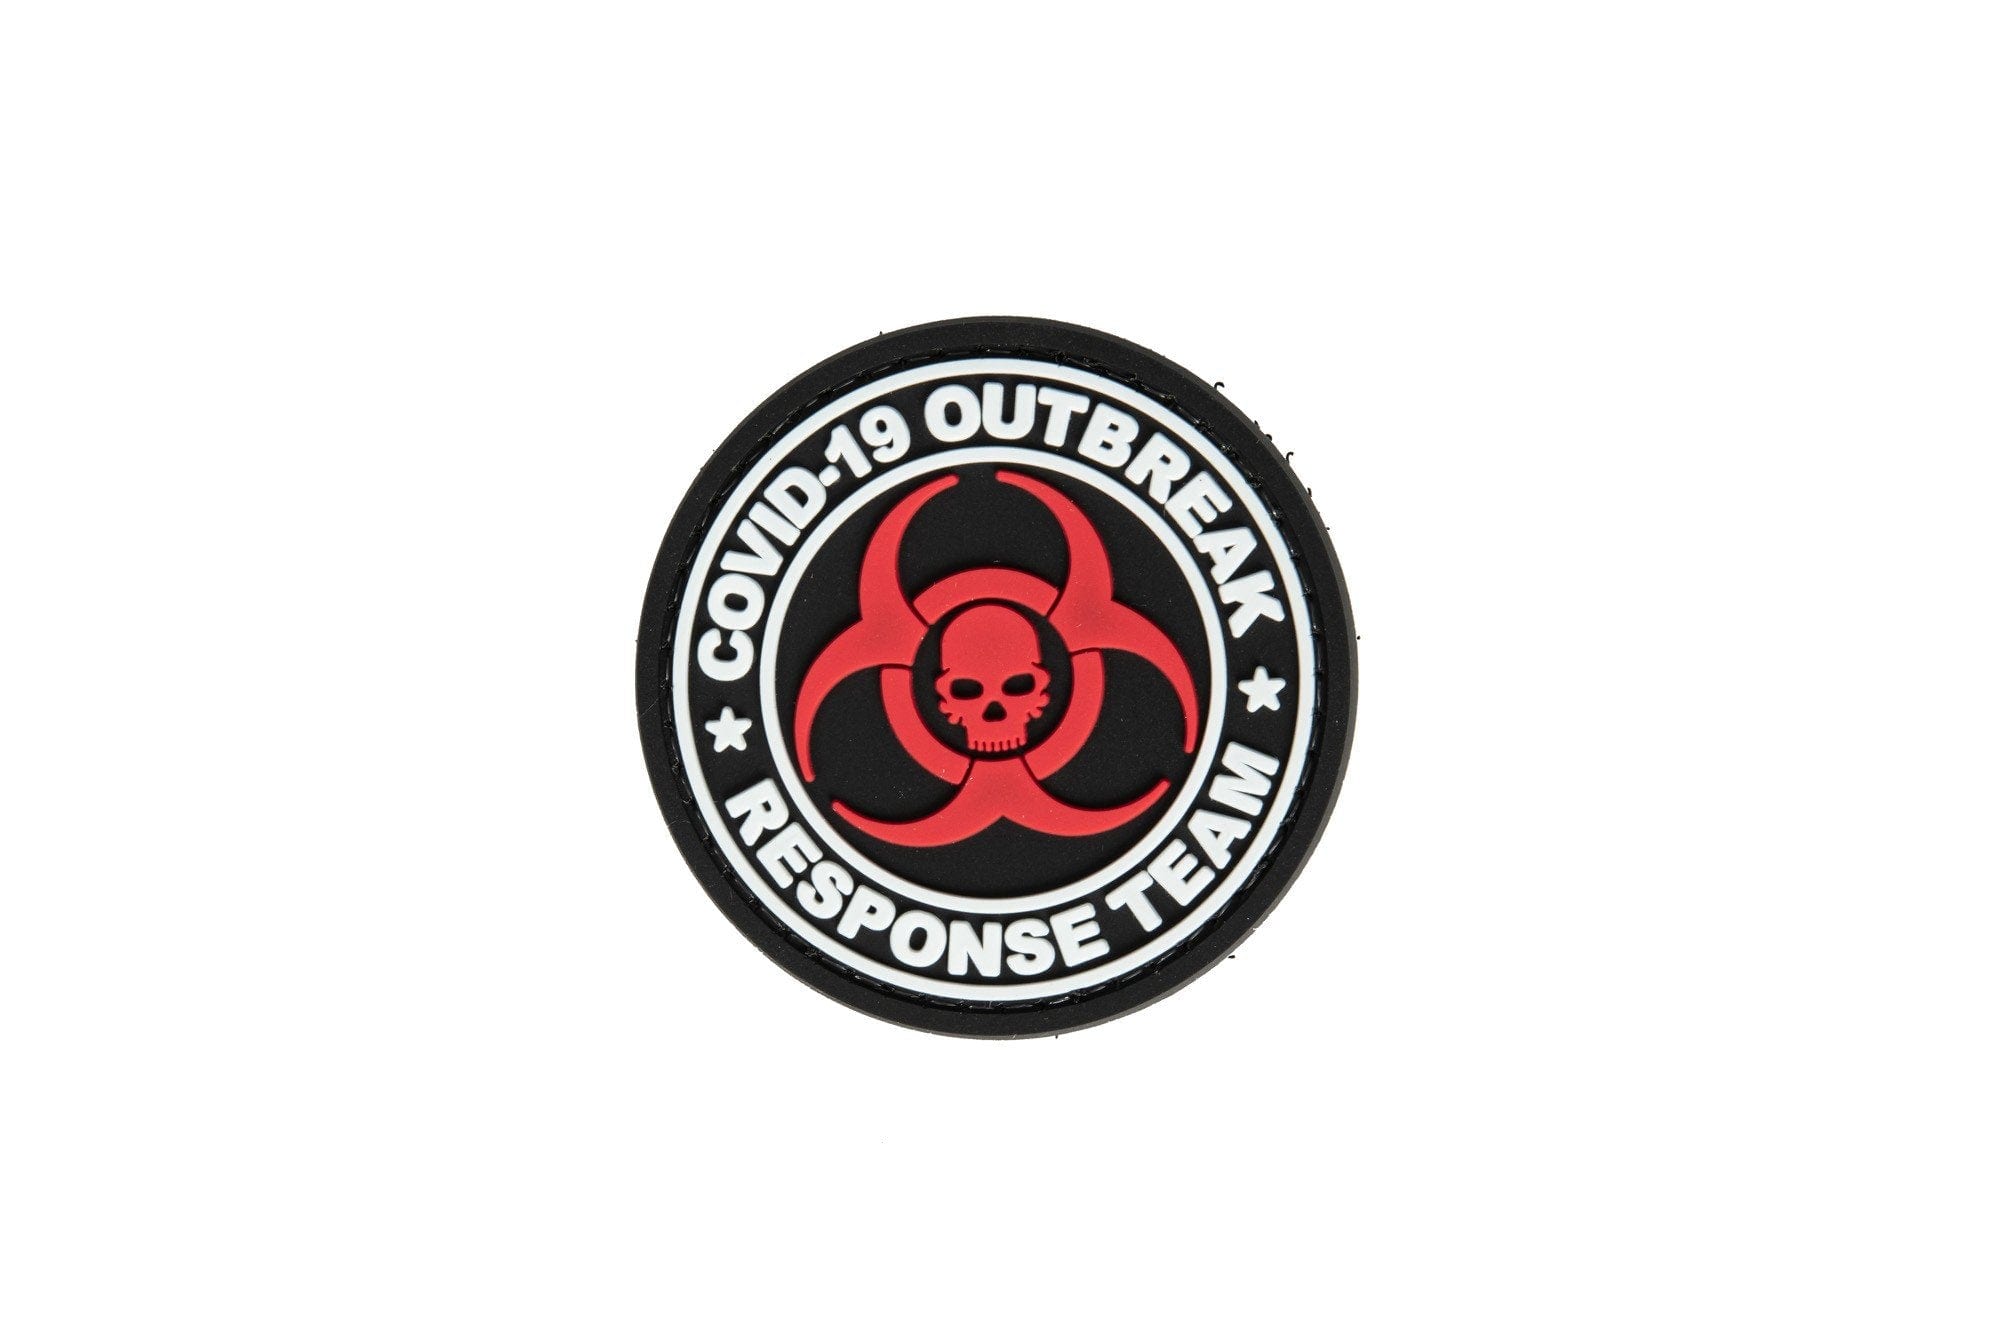 3D COVID-19 Outbreak Response Team Patch - Black